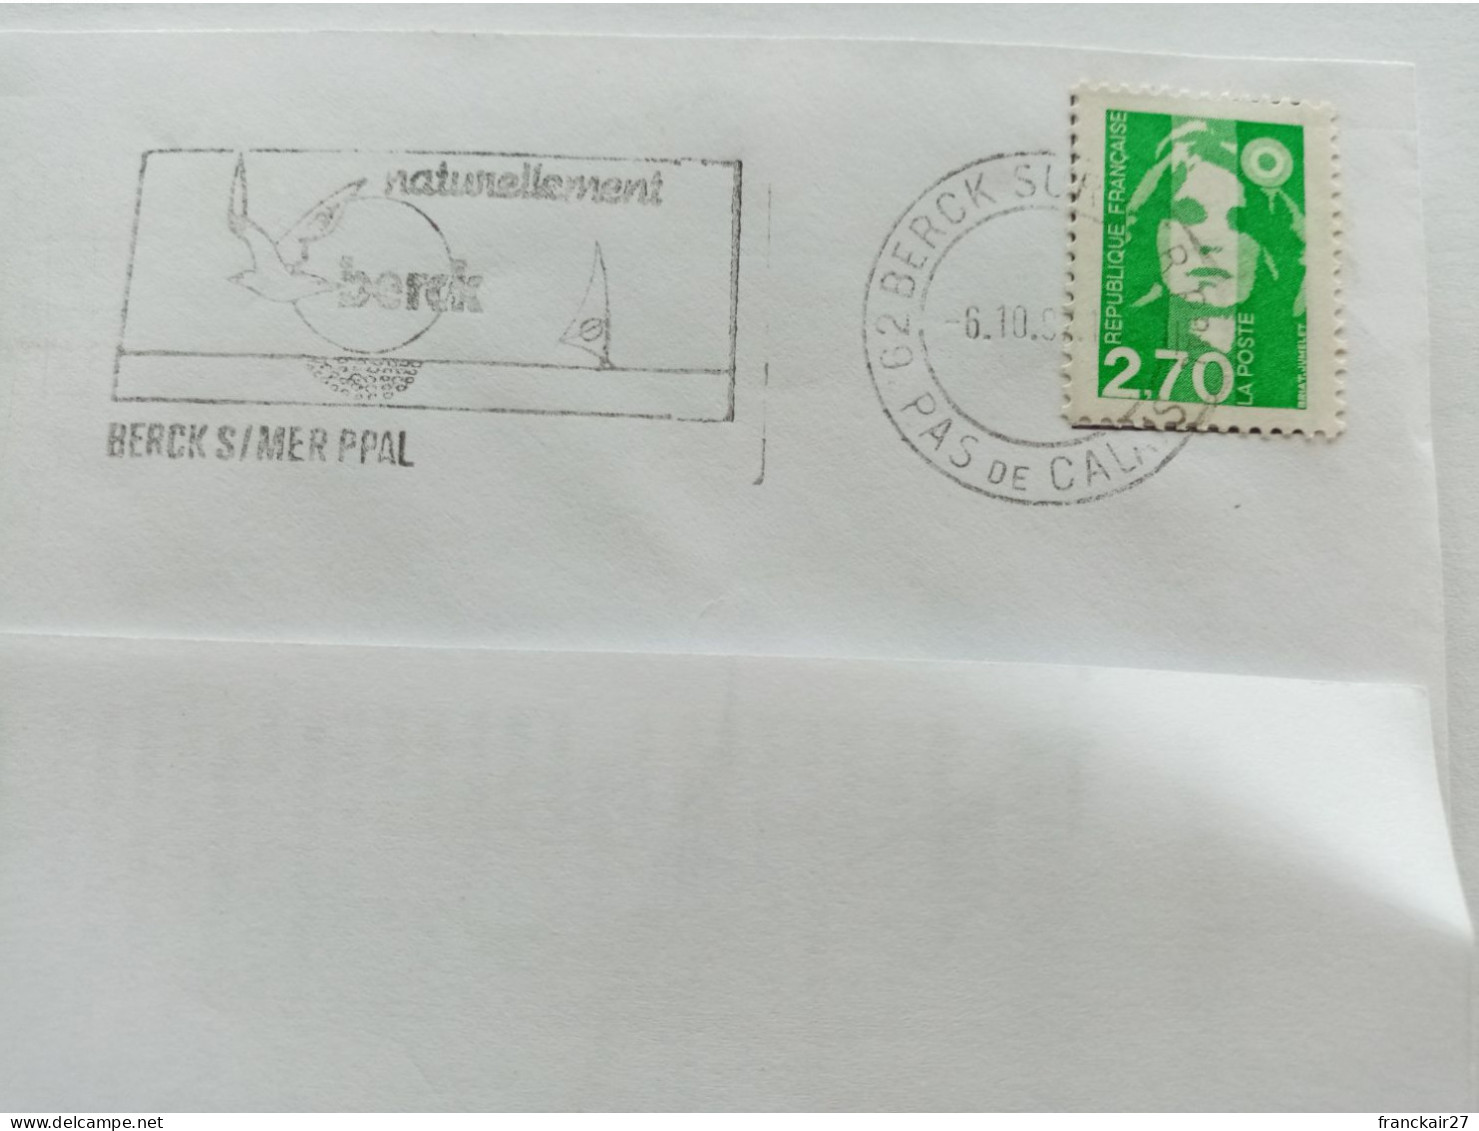 Berck Sur Mer Ppal, Mouette - Mechanical Postmarks (Advertisement)